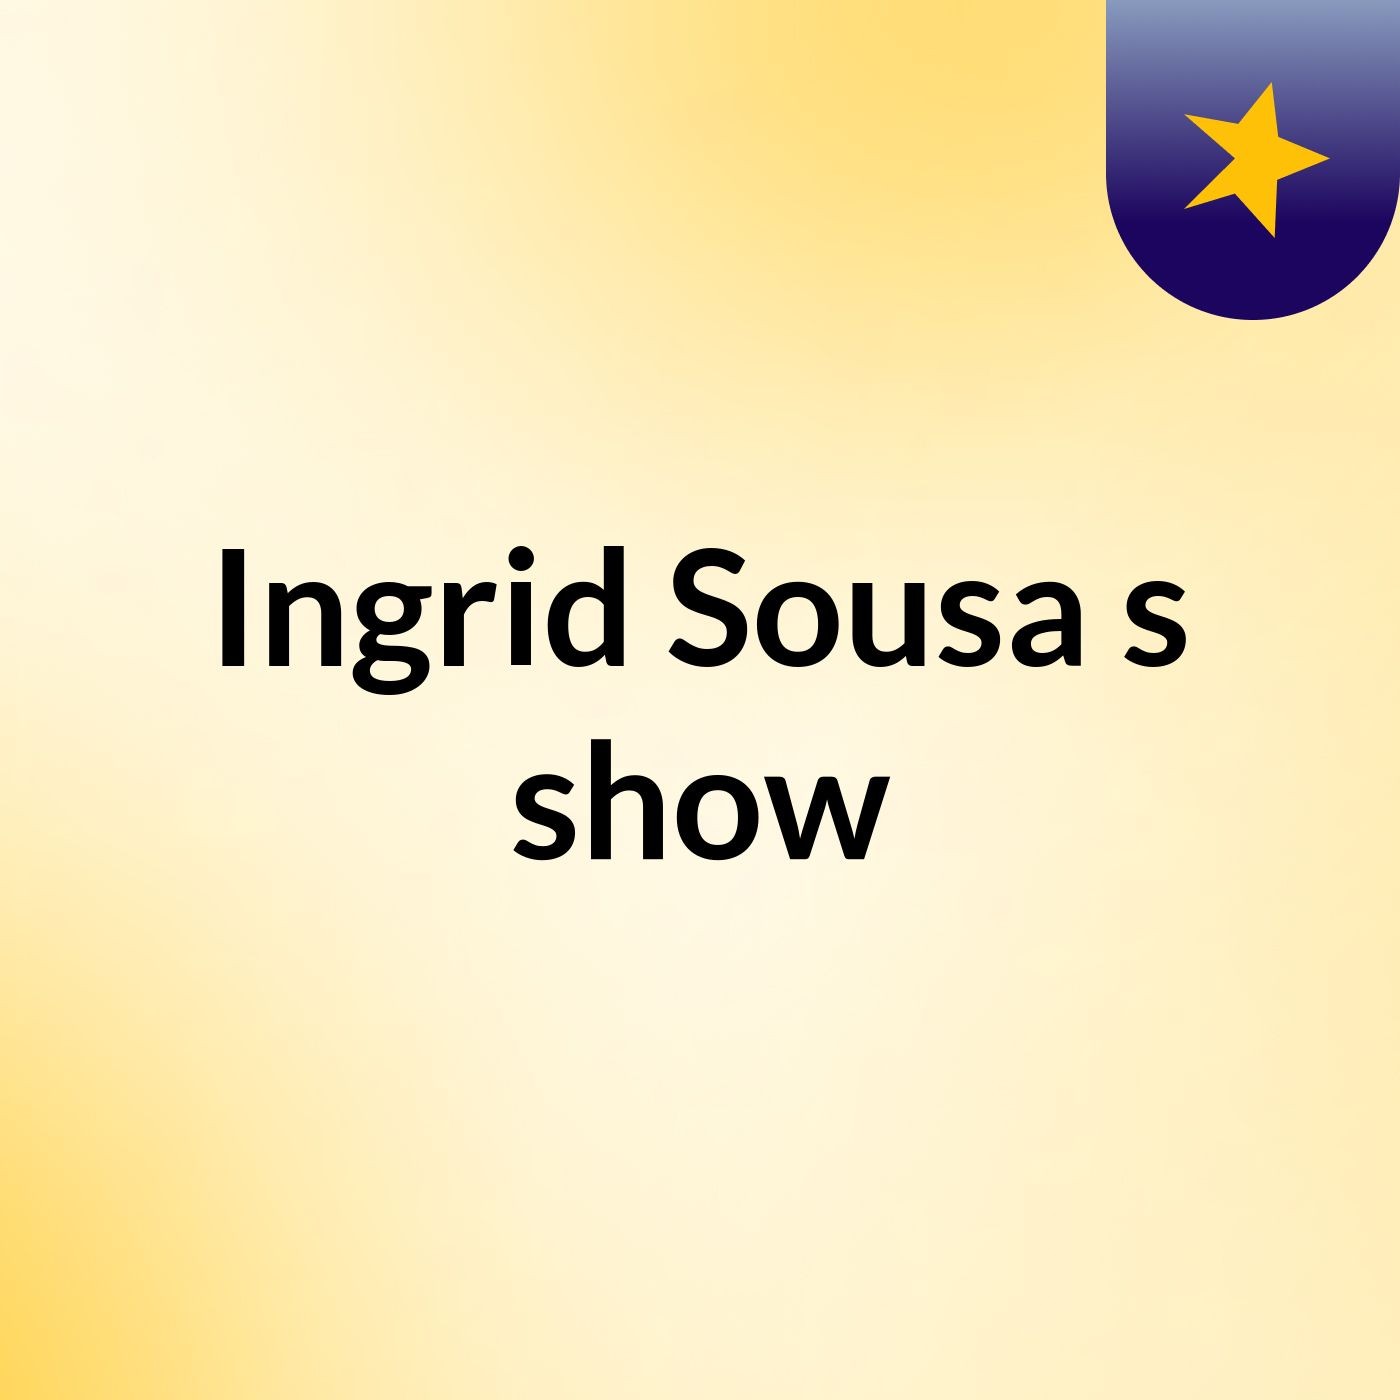 Ingrid Sousa's show